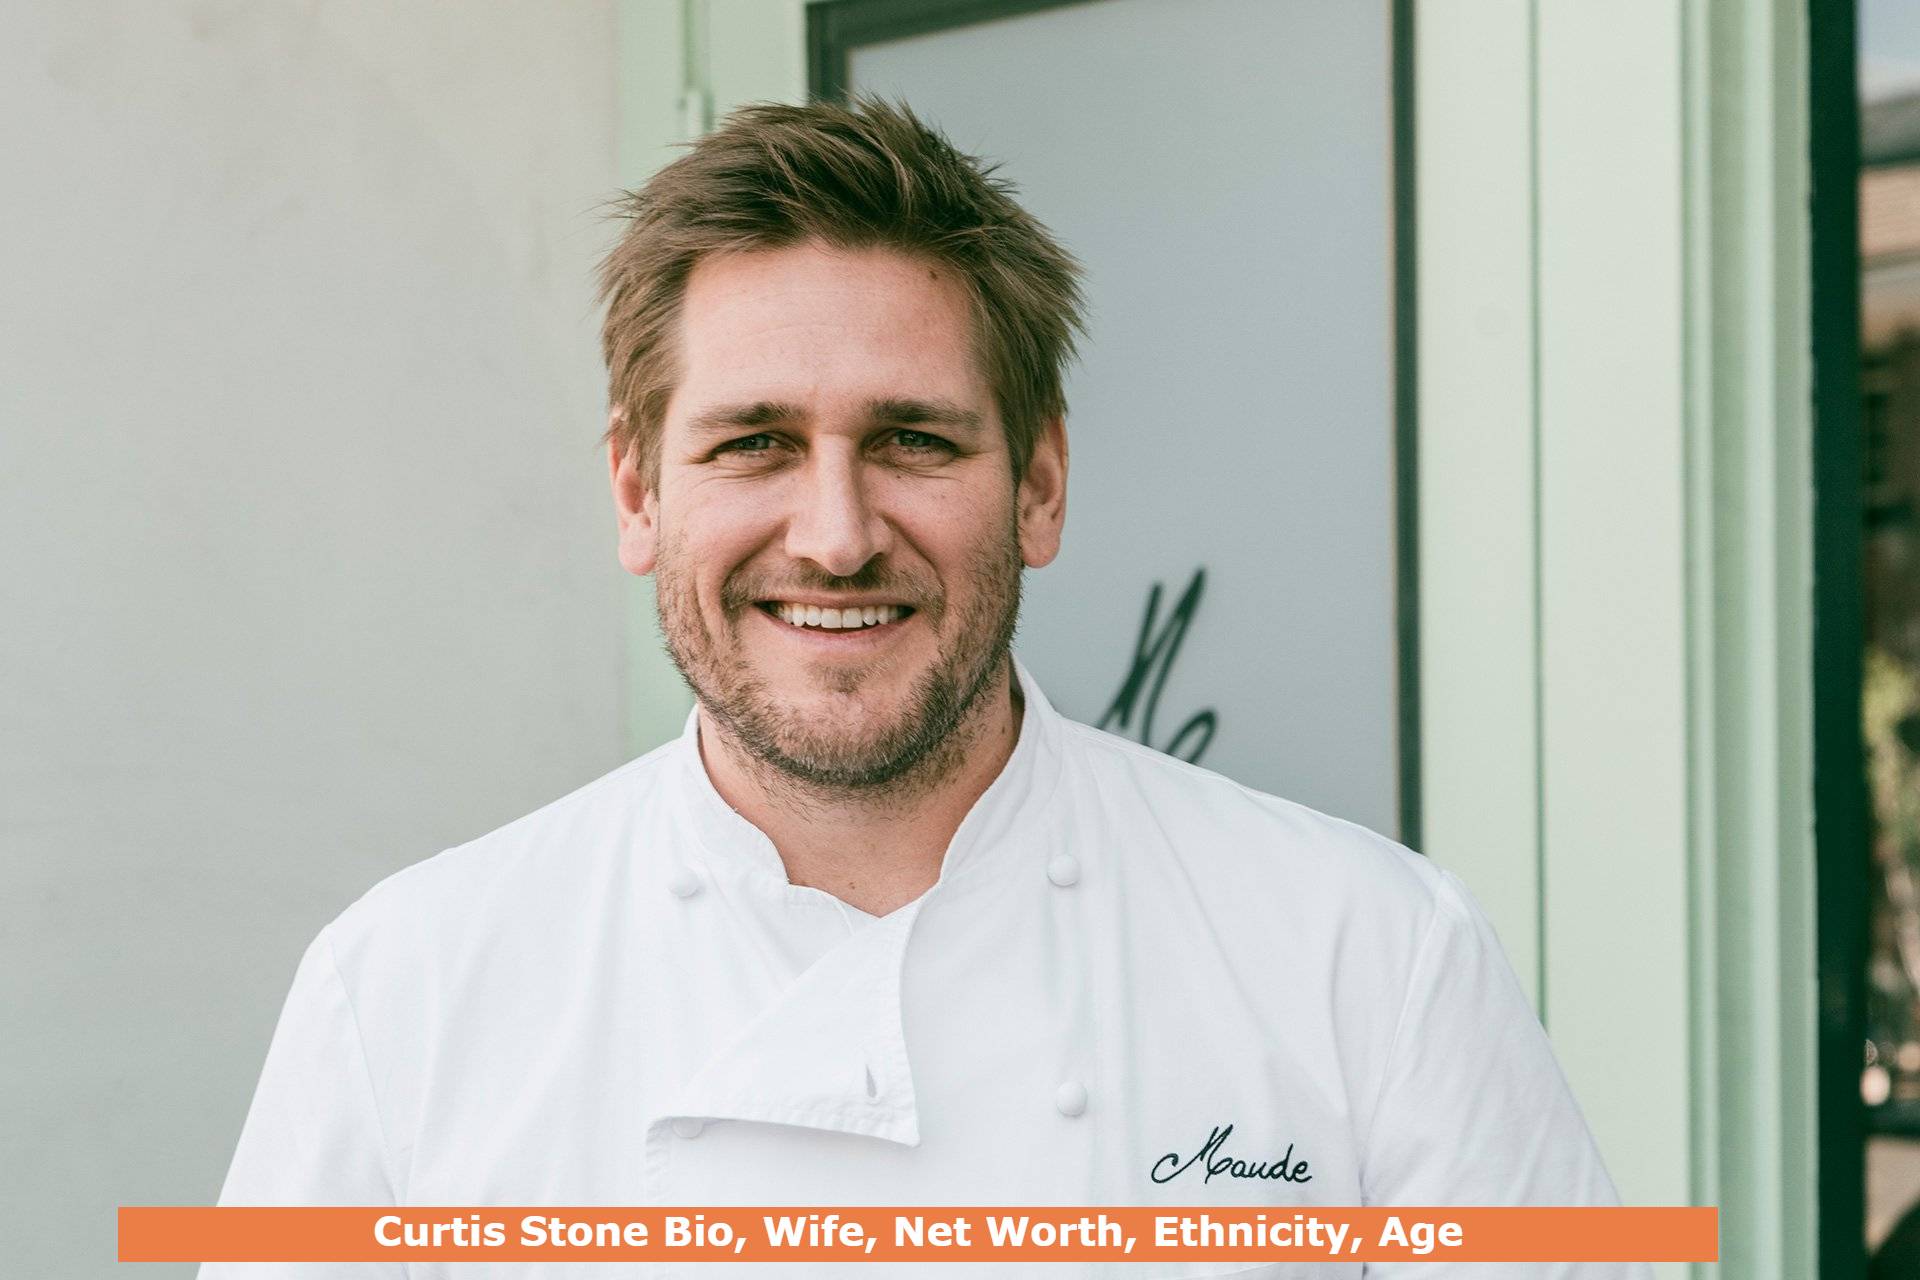 Curtis Stone Bio, Wife, Net Worth, Ethnicity, Age